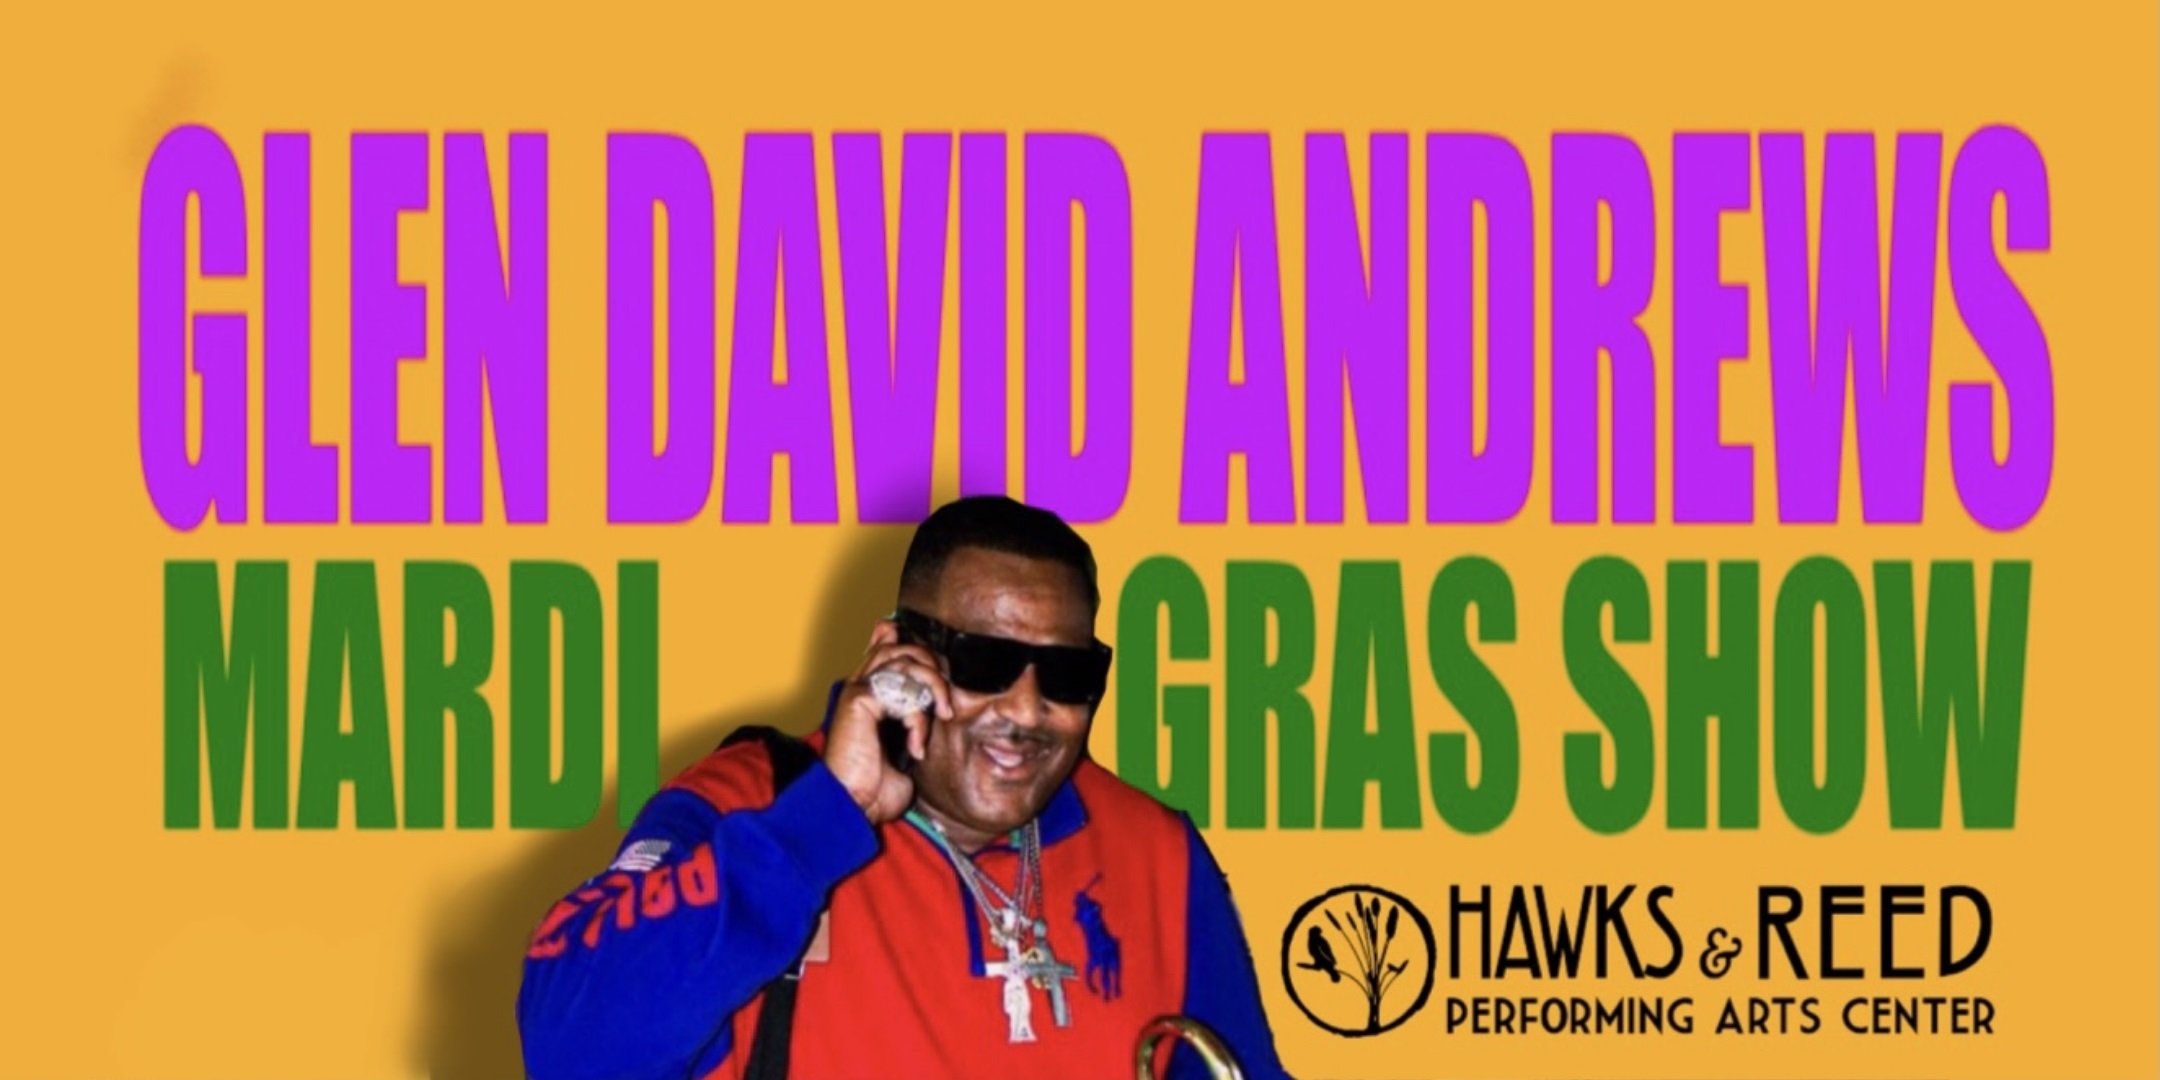 Glen David Andrews: Mardi Gras Show at Hawks & Reed